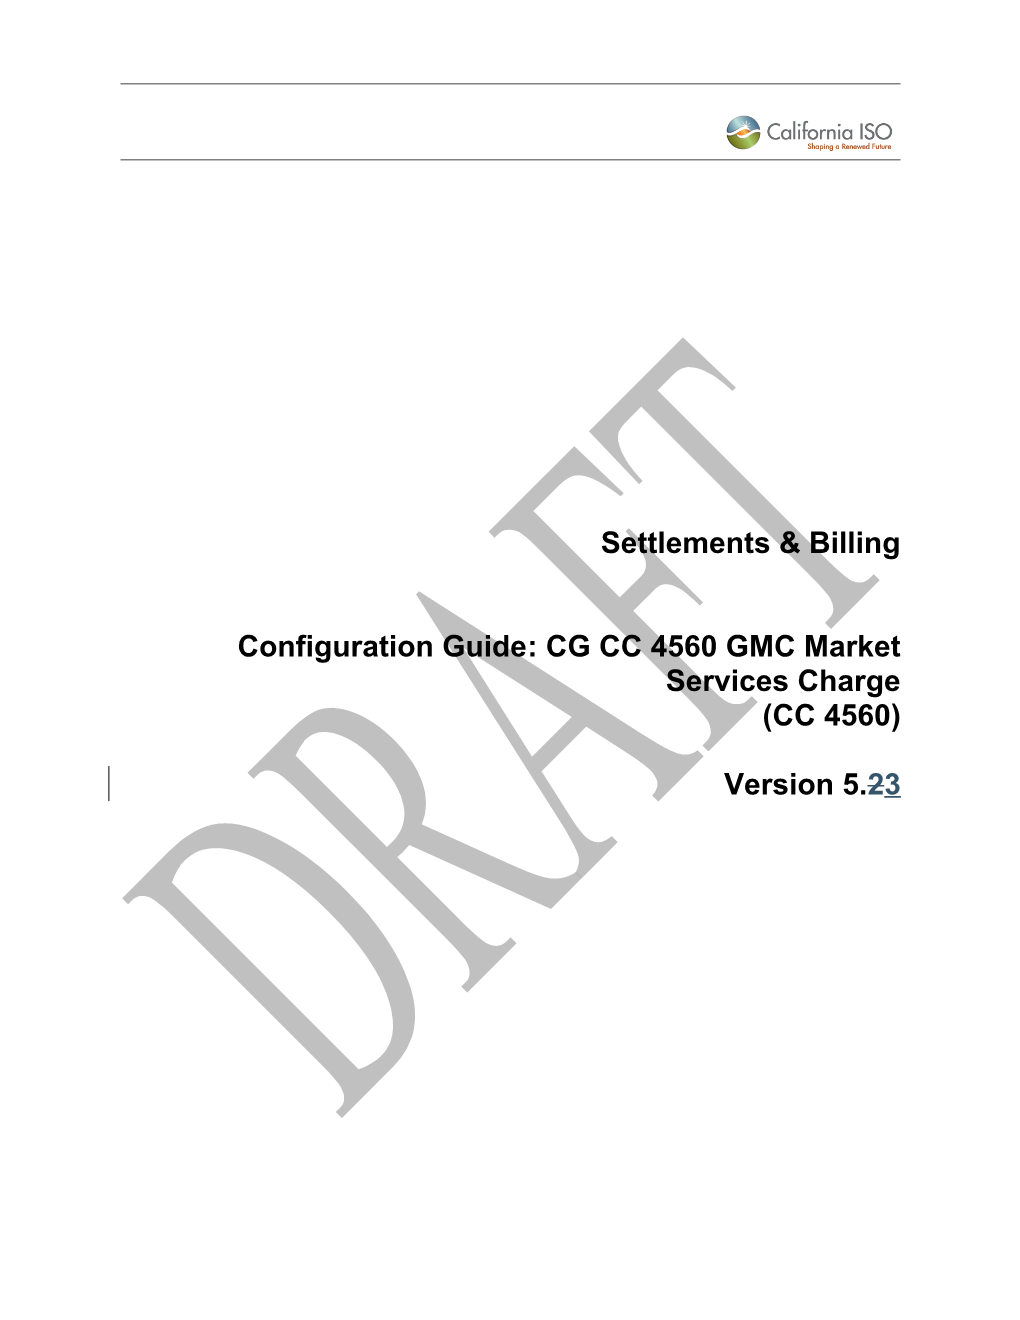 CG CC 4560 GMC Market Services Charge